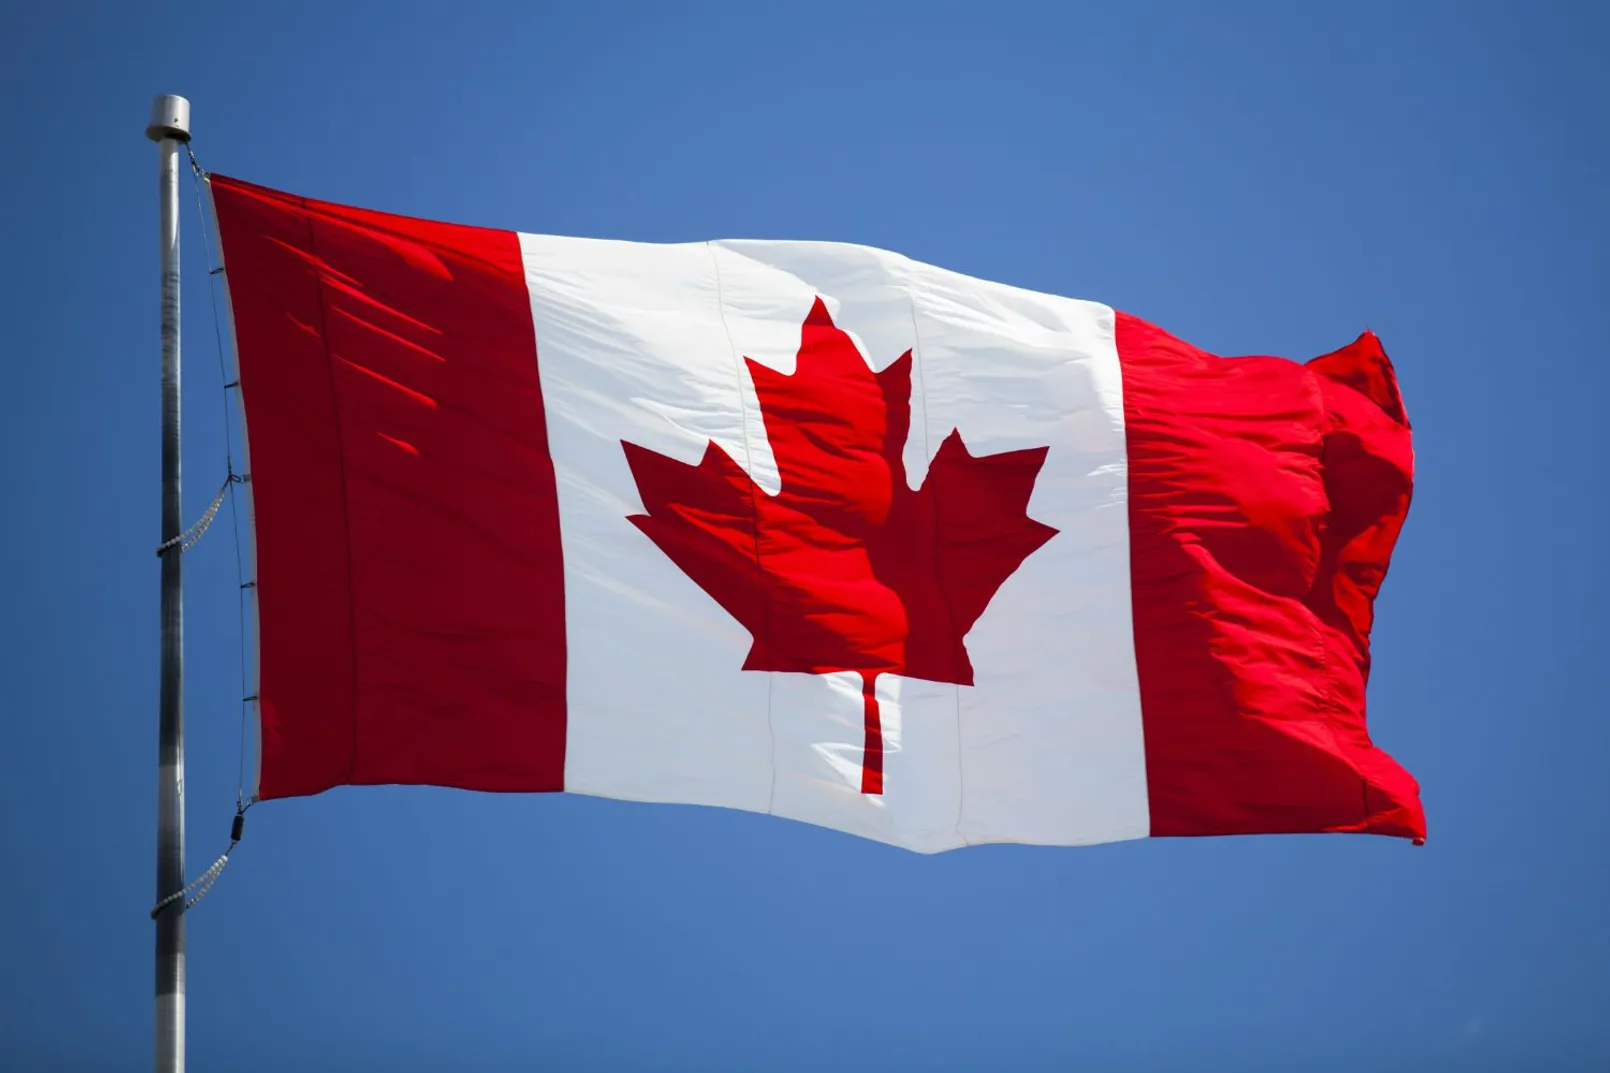 National Flag Canada Lge2 56a0e57f5f9b58eba4b4f422